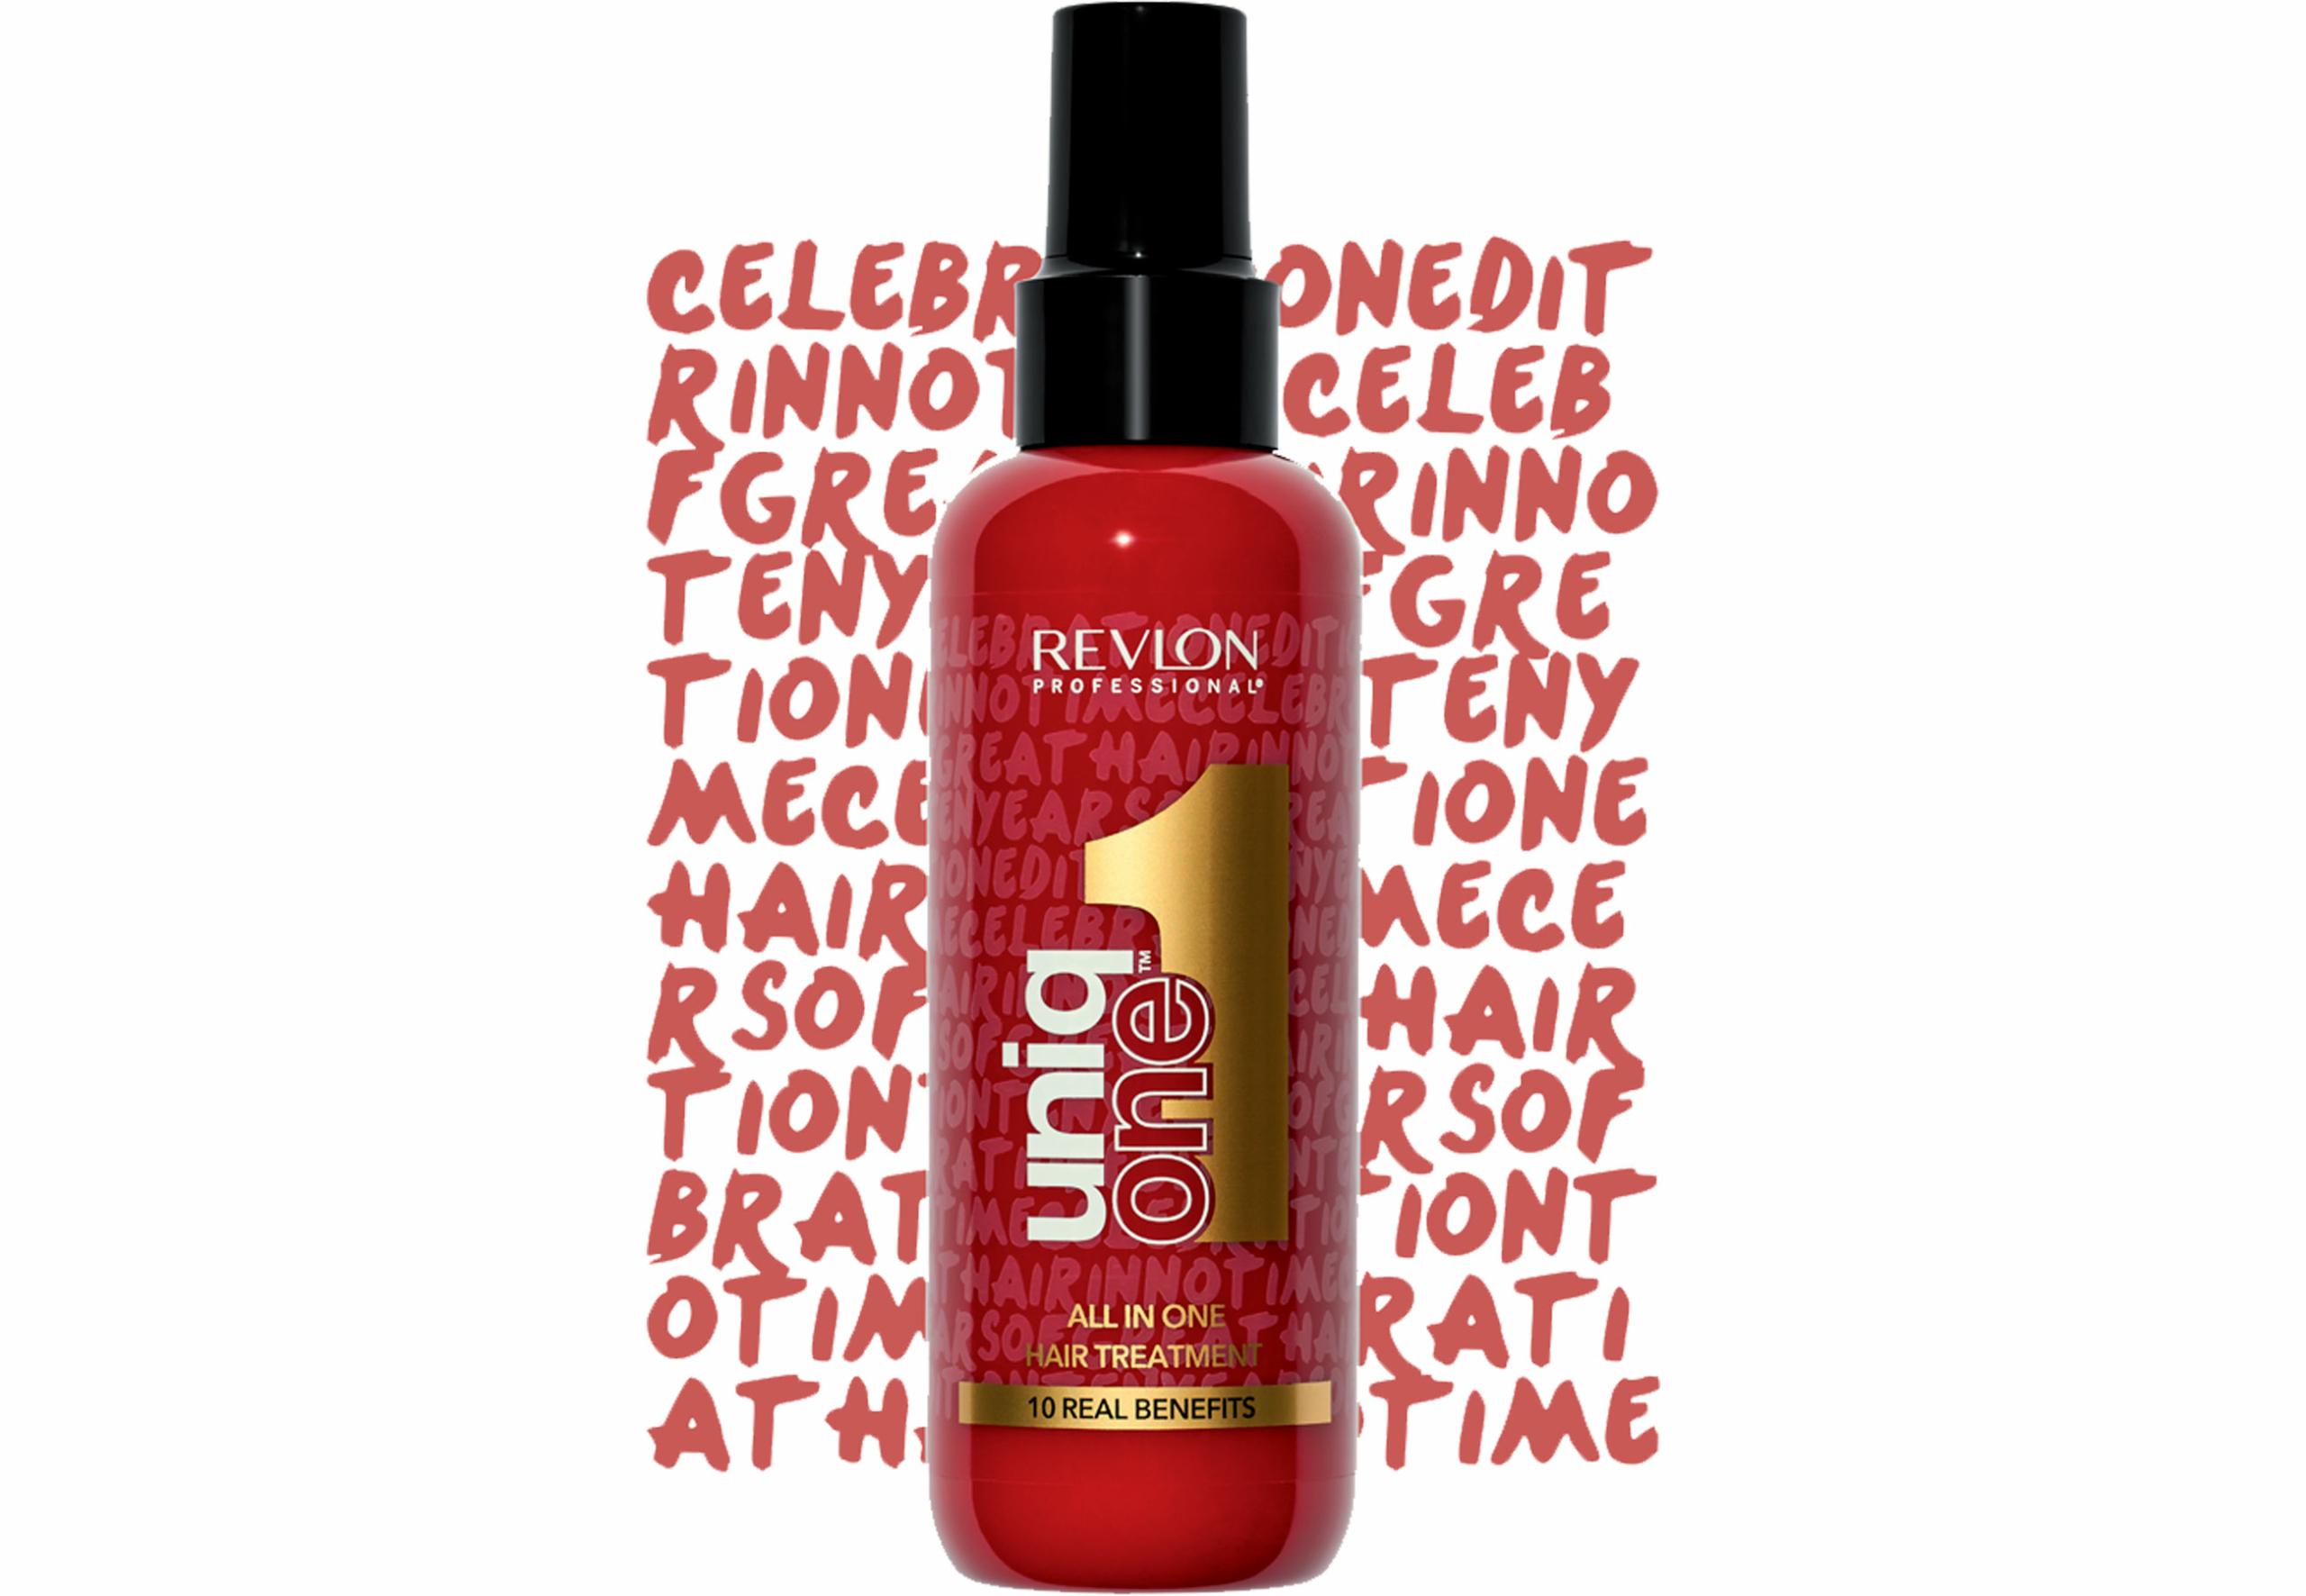 Revlon Professional Hair Treatment Celebration Edition